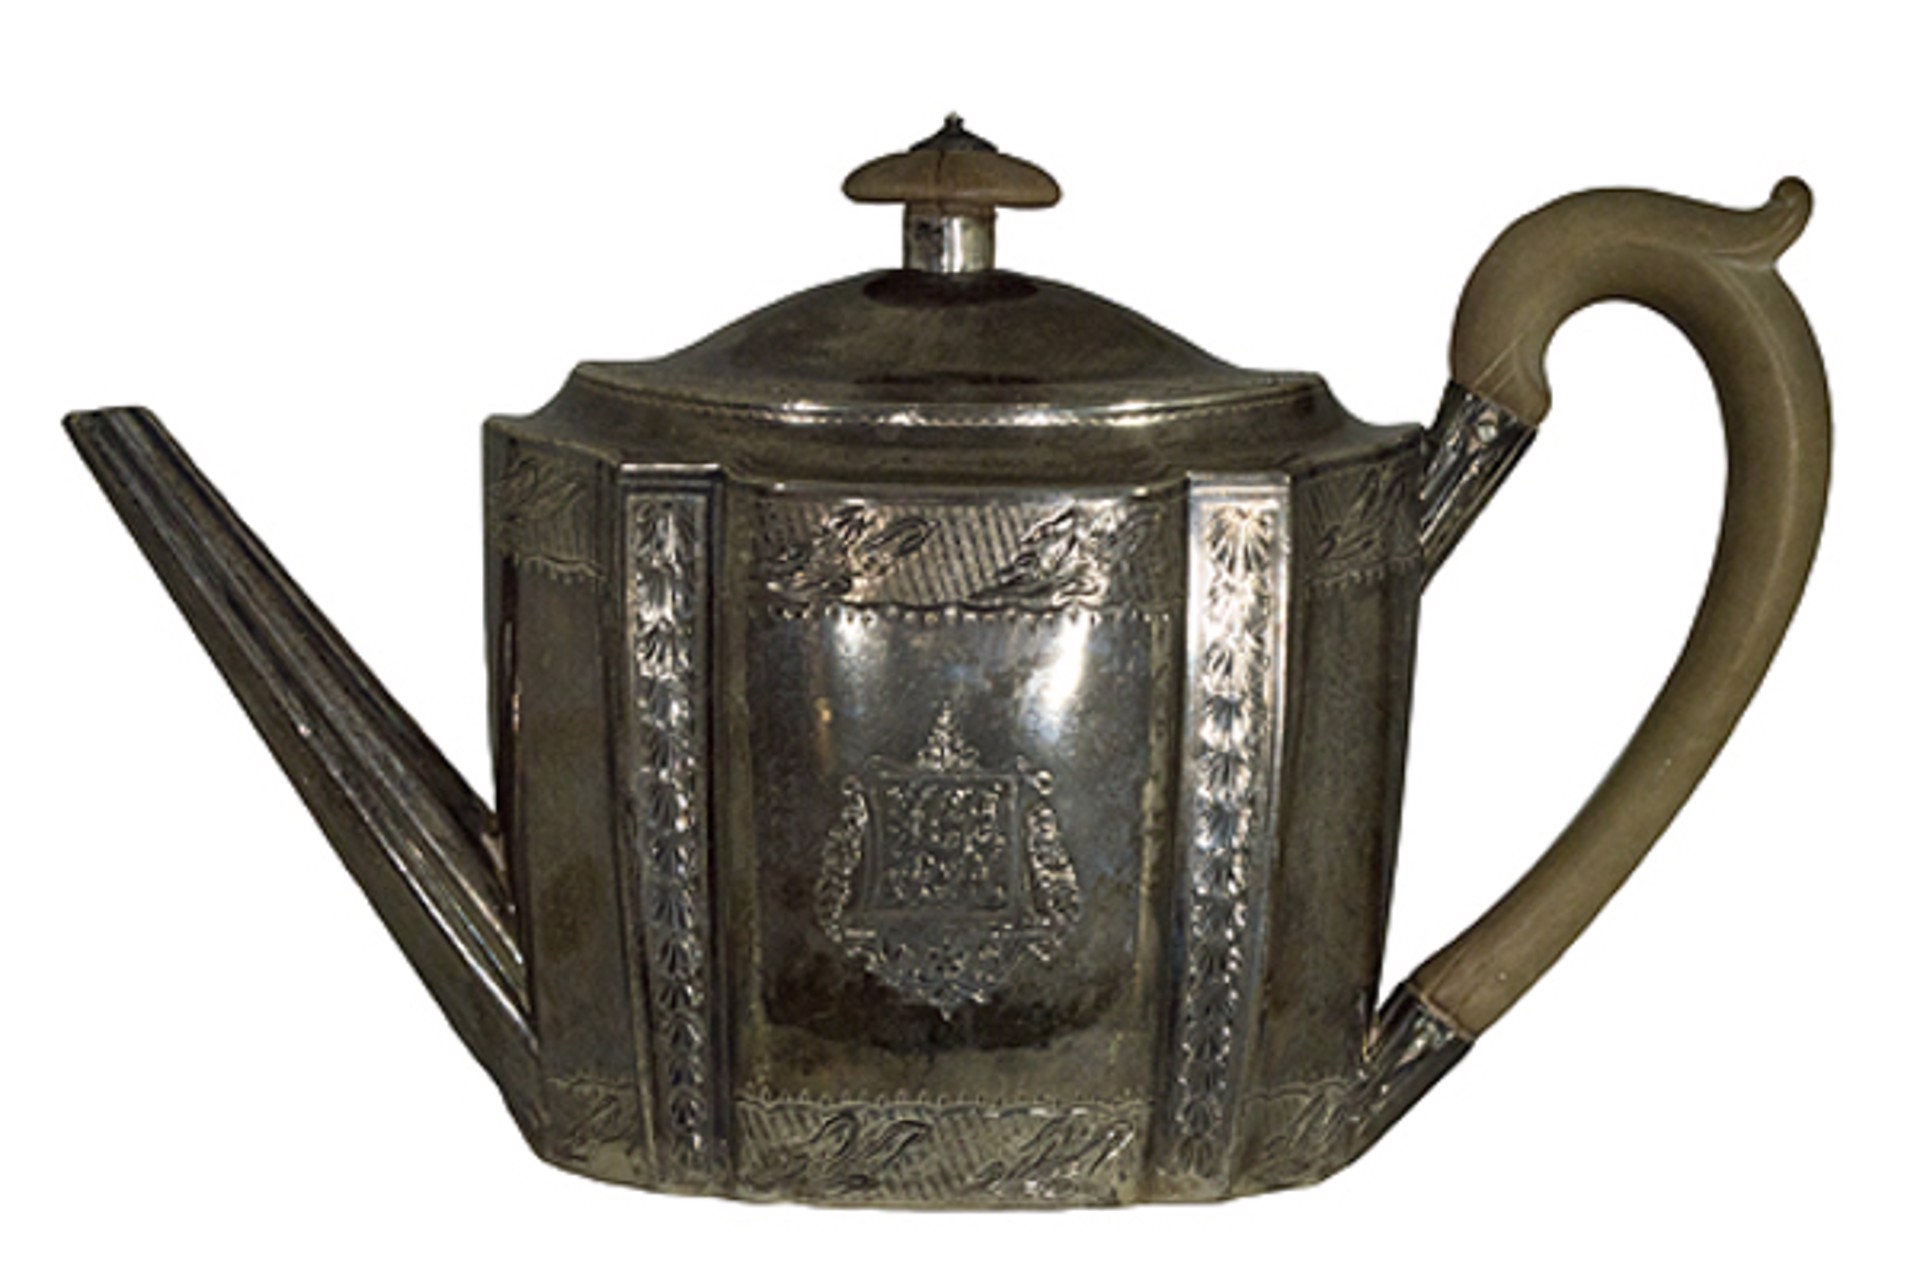 Teapot, Leopard's Head From London, King George III reign by John Emes